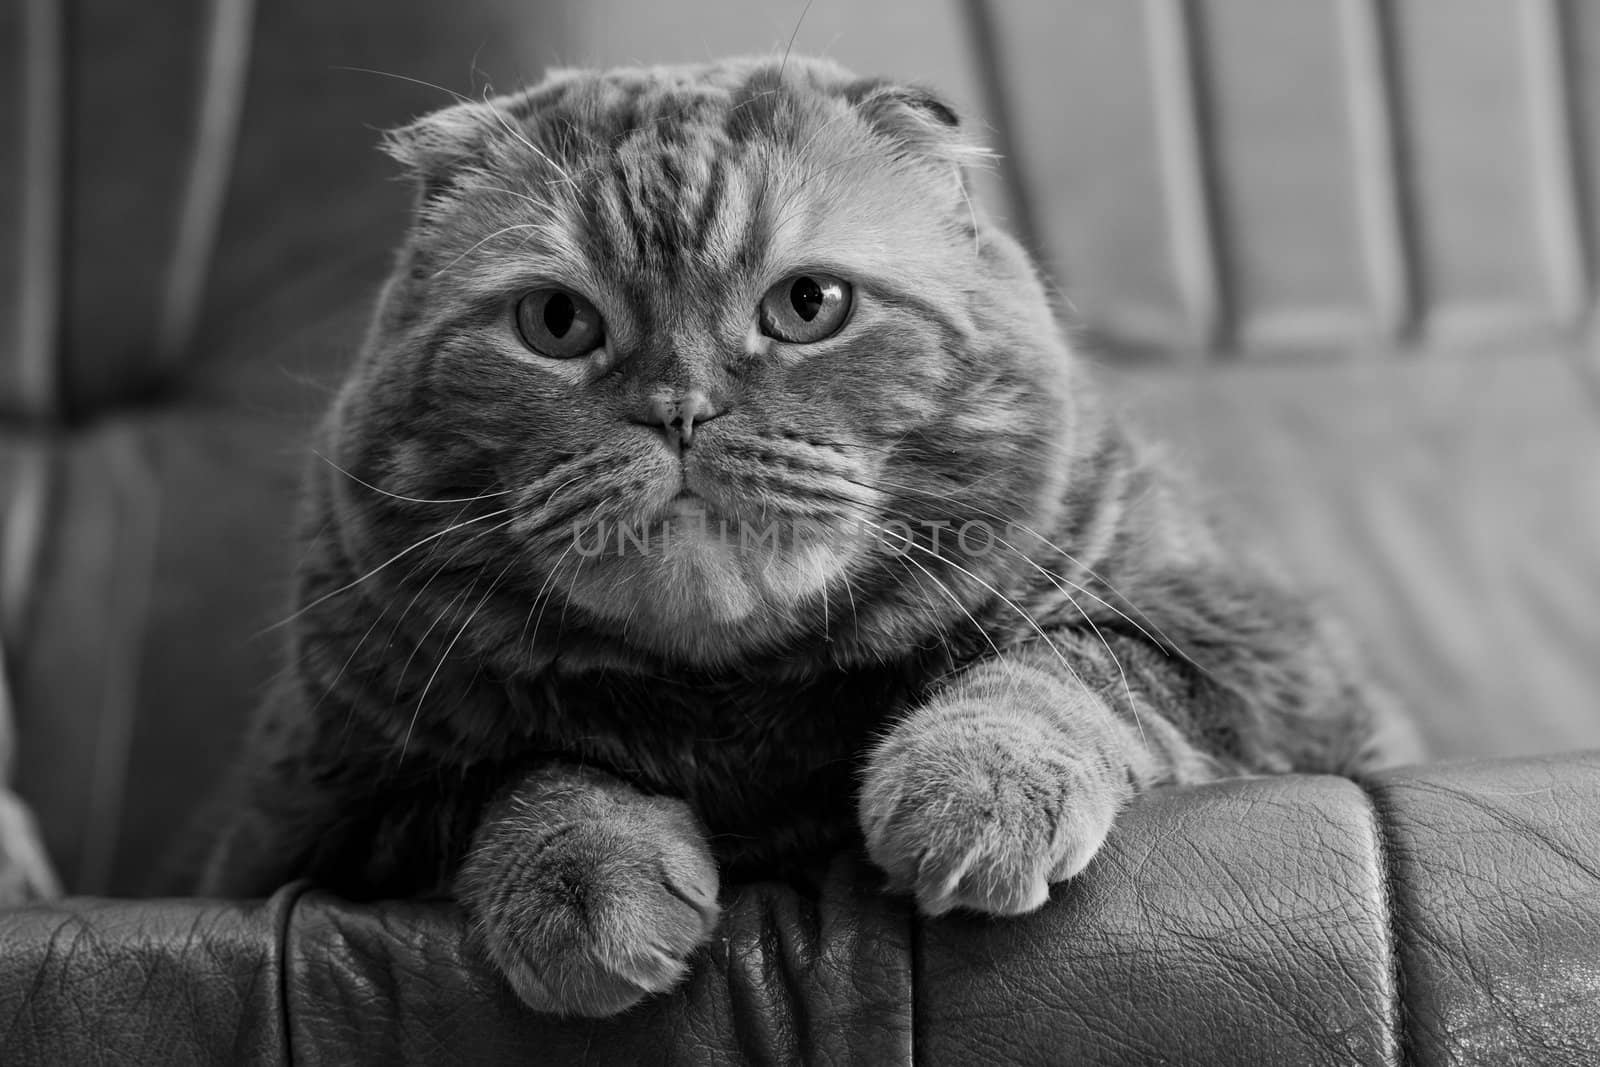 A scottish fold cat lying on leather sofa
